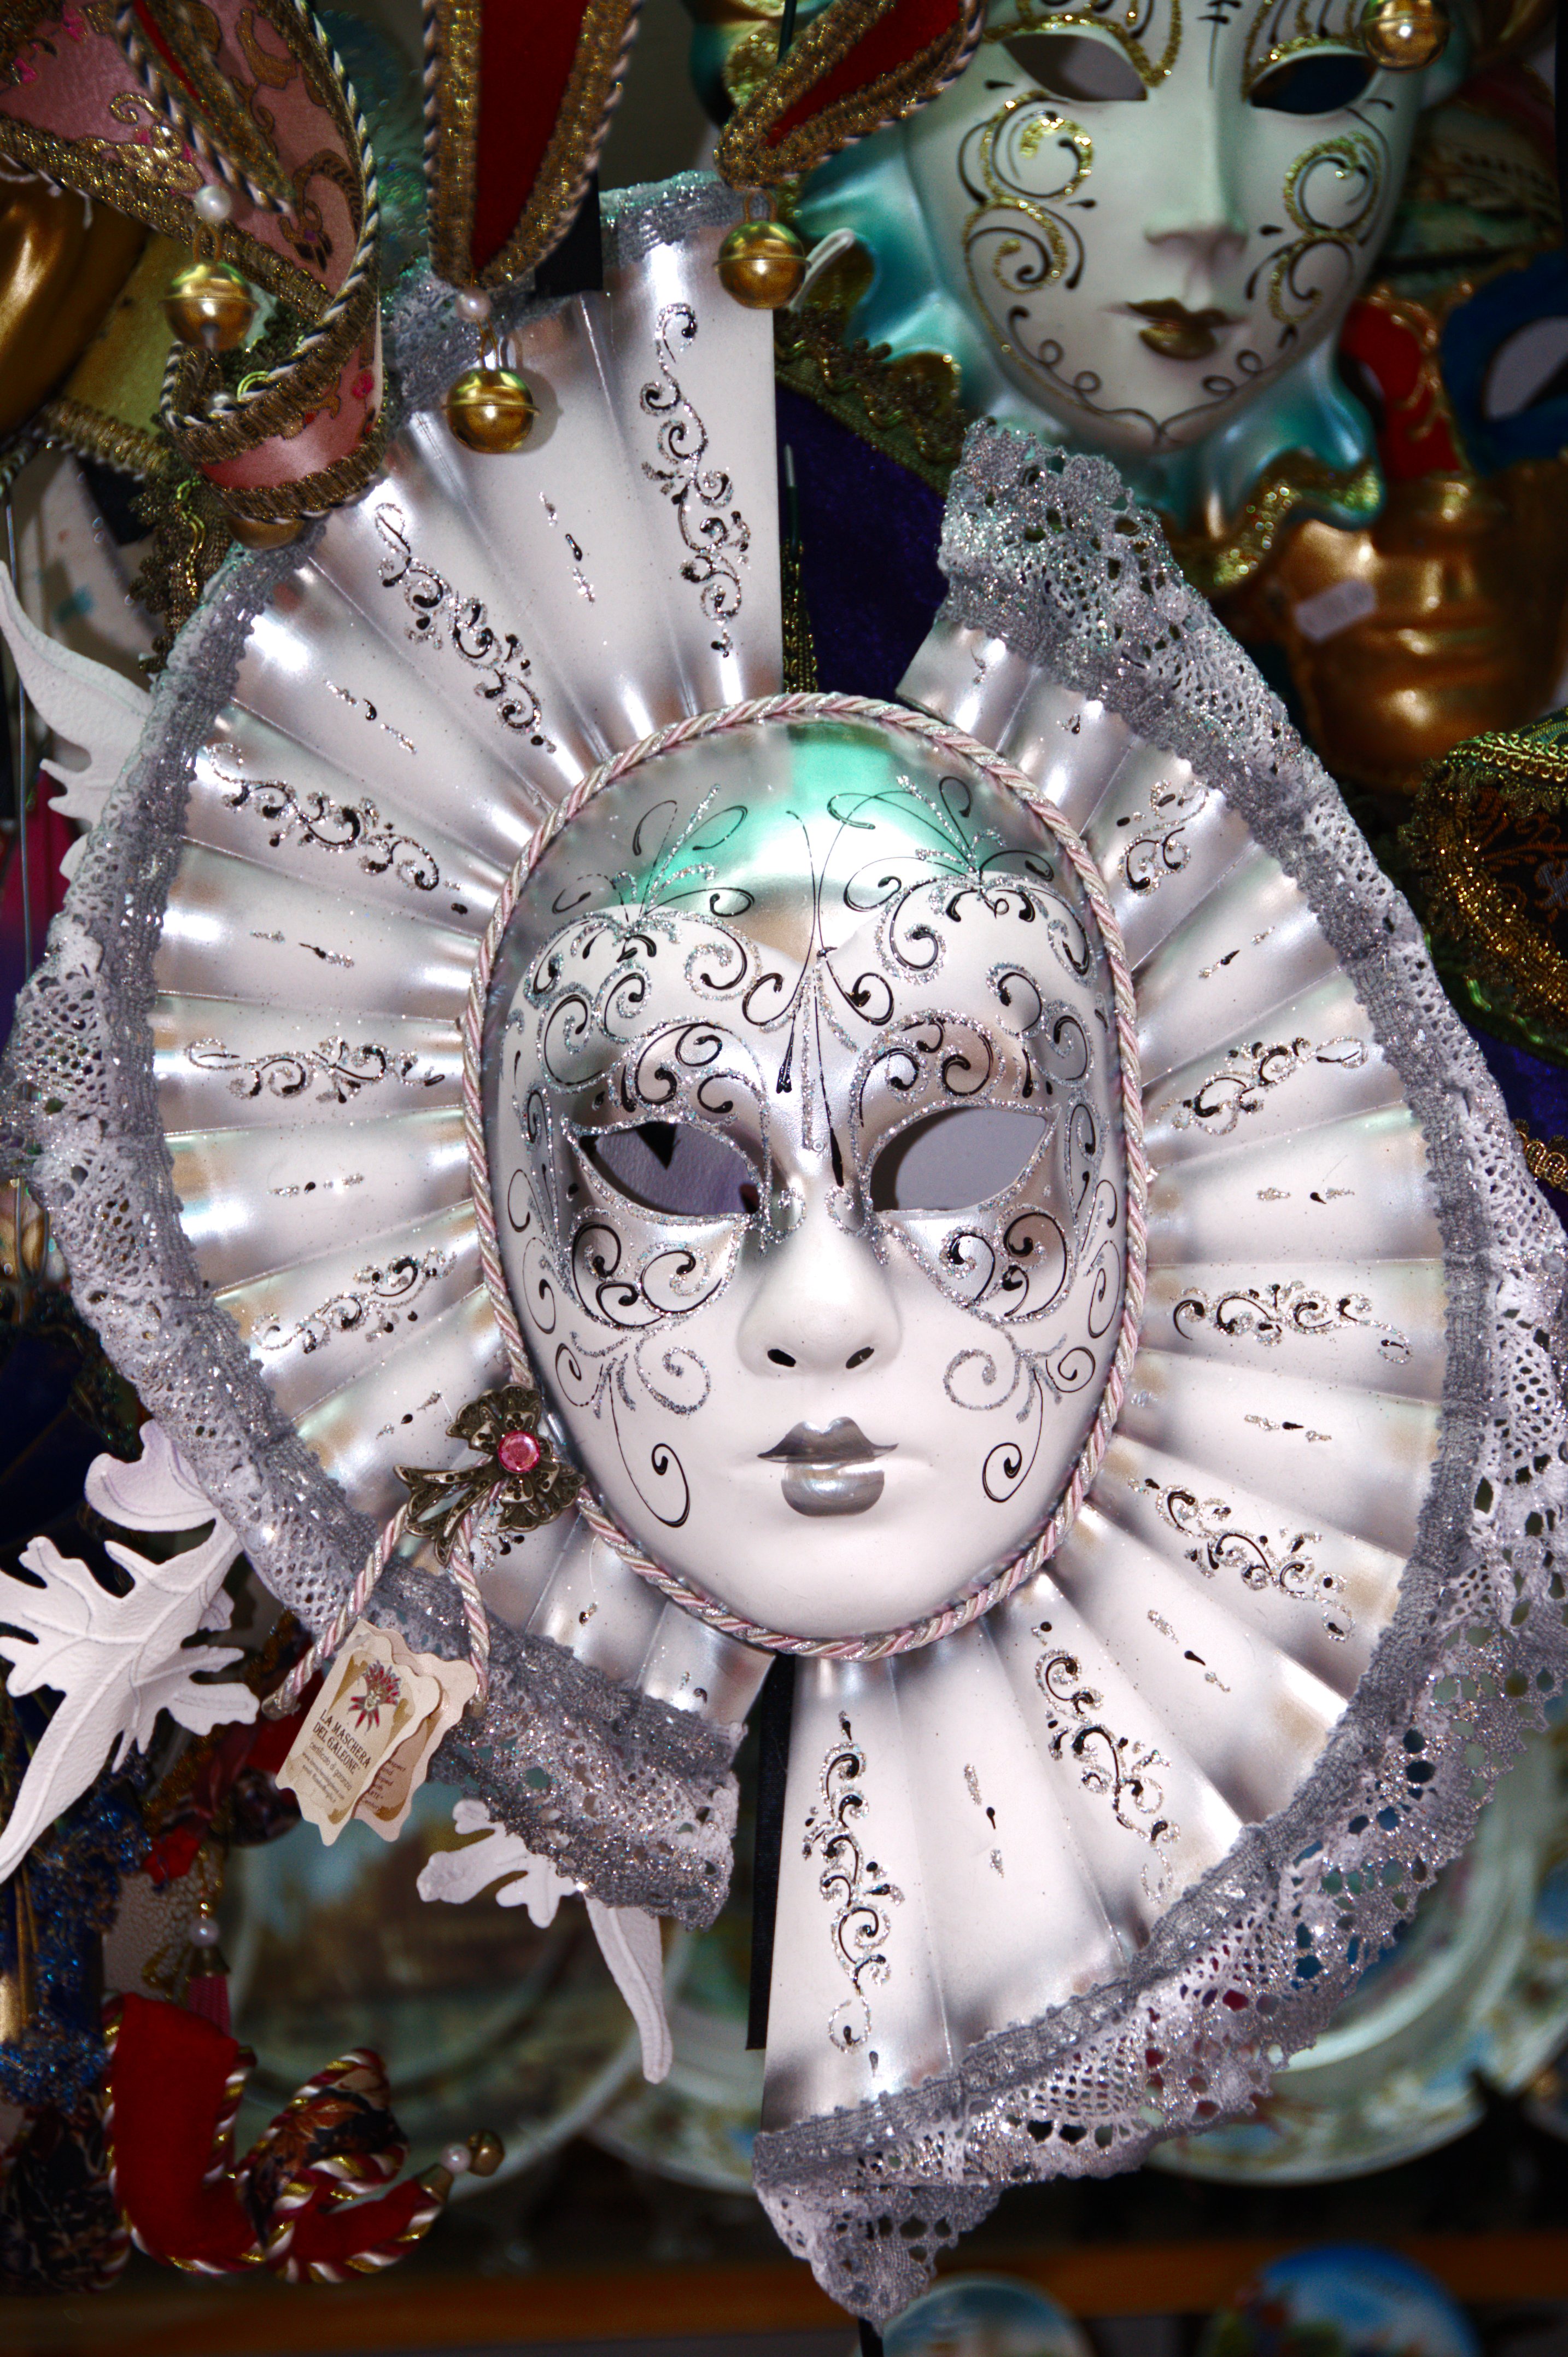 File:Venetian Carnival Mask - Maschera di Carnevale - Venice Italy -  Creative Commons by gnuckx (4701310729).jpg - Wikipedia